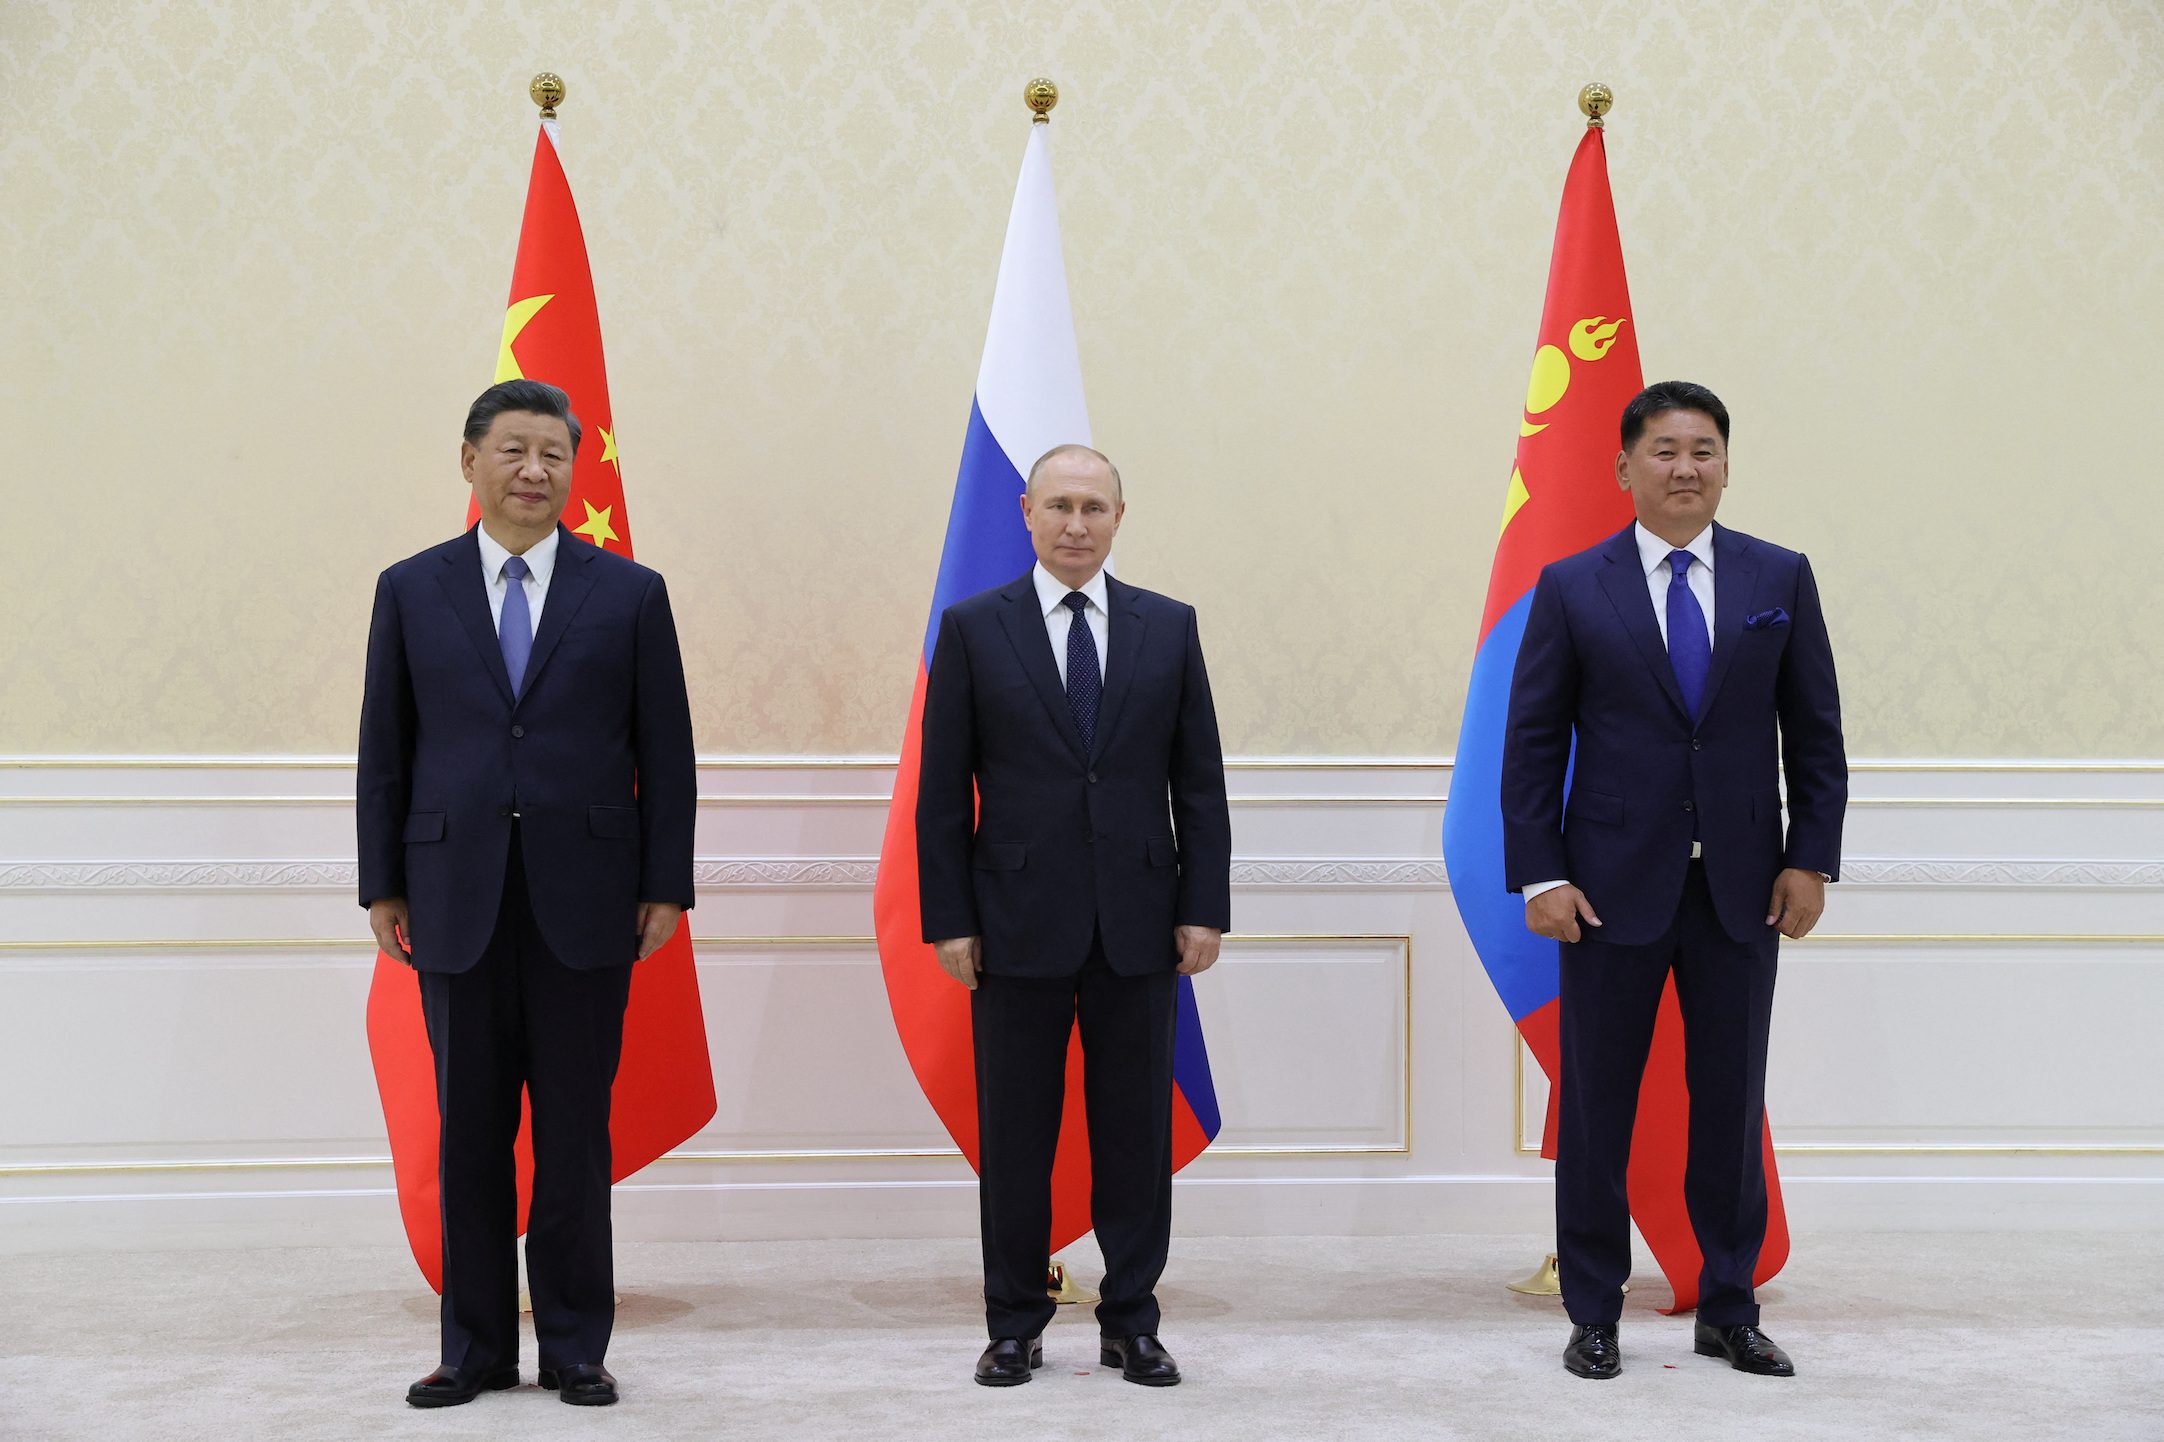 Xi has concerns over Ukraine, Russia’s Putin says